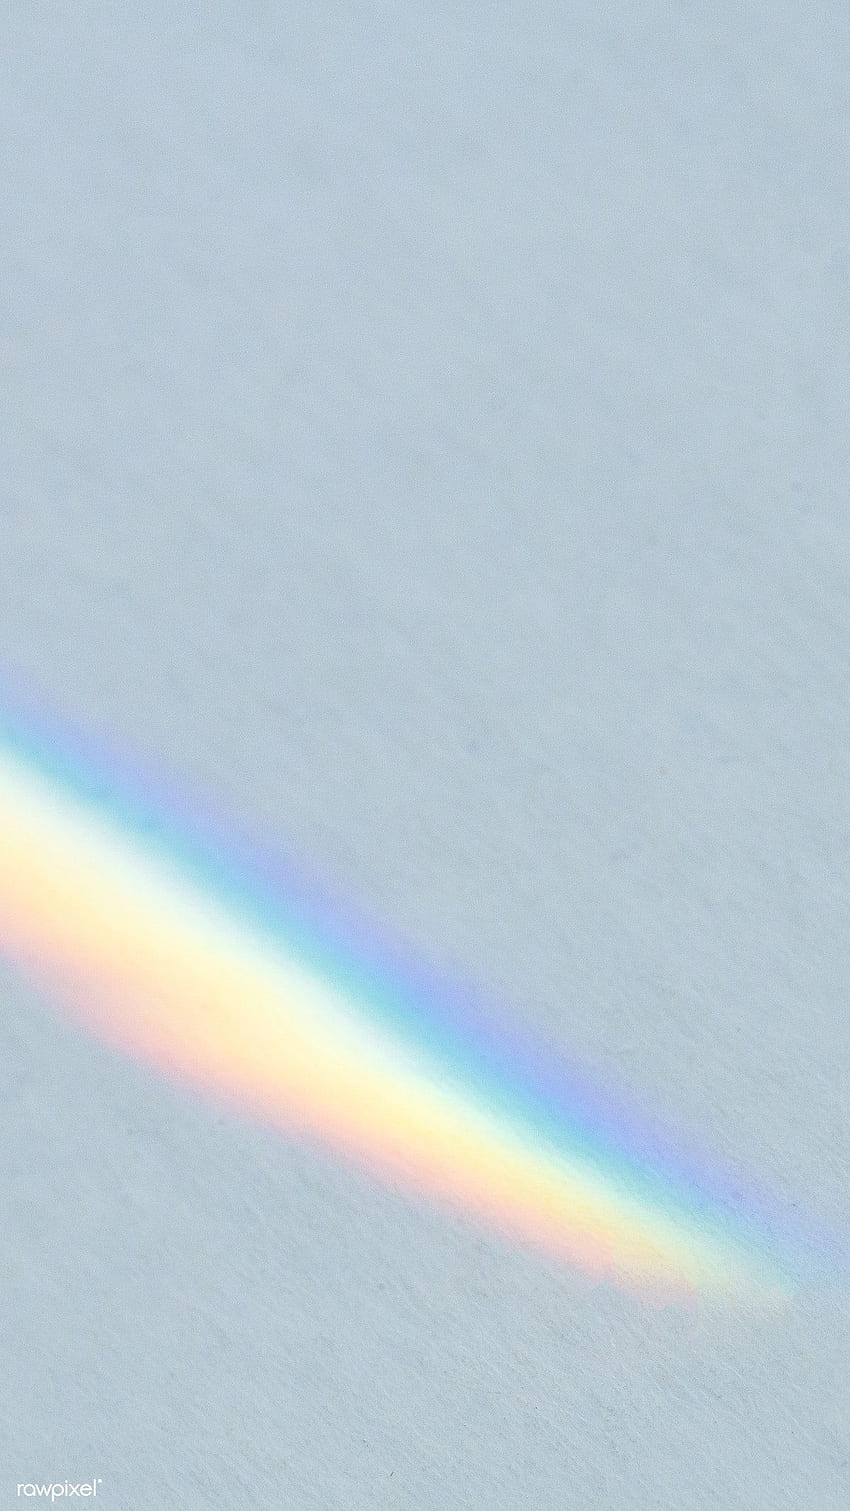 Latar belakang metalik defokus abu-abu dengan ponsel bocor ringan. / Teddy Rawpixel. Kebocoran cahaya, templat bingkai Instagram, Aesthetic Rainbow wallpaper ponsel HD